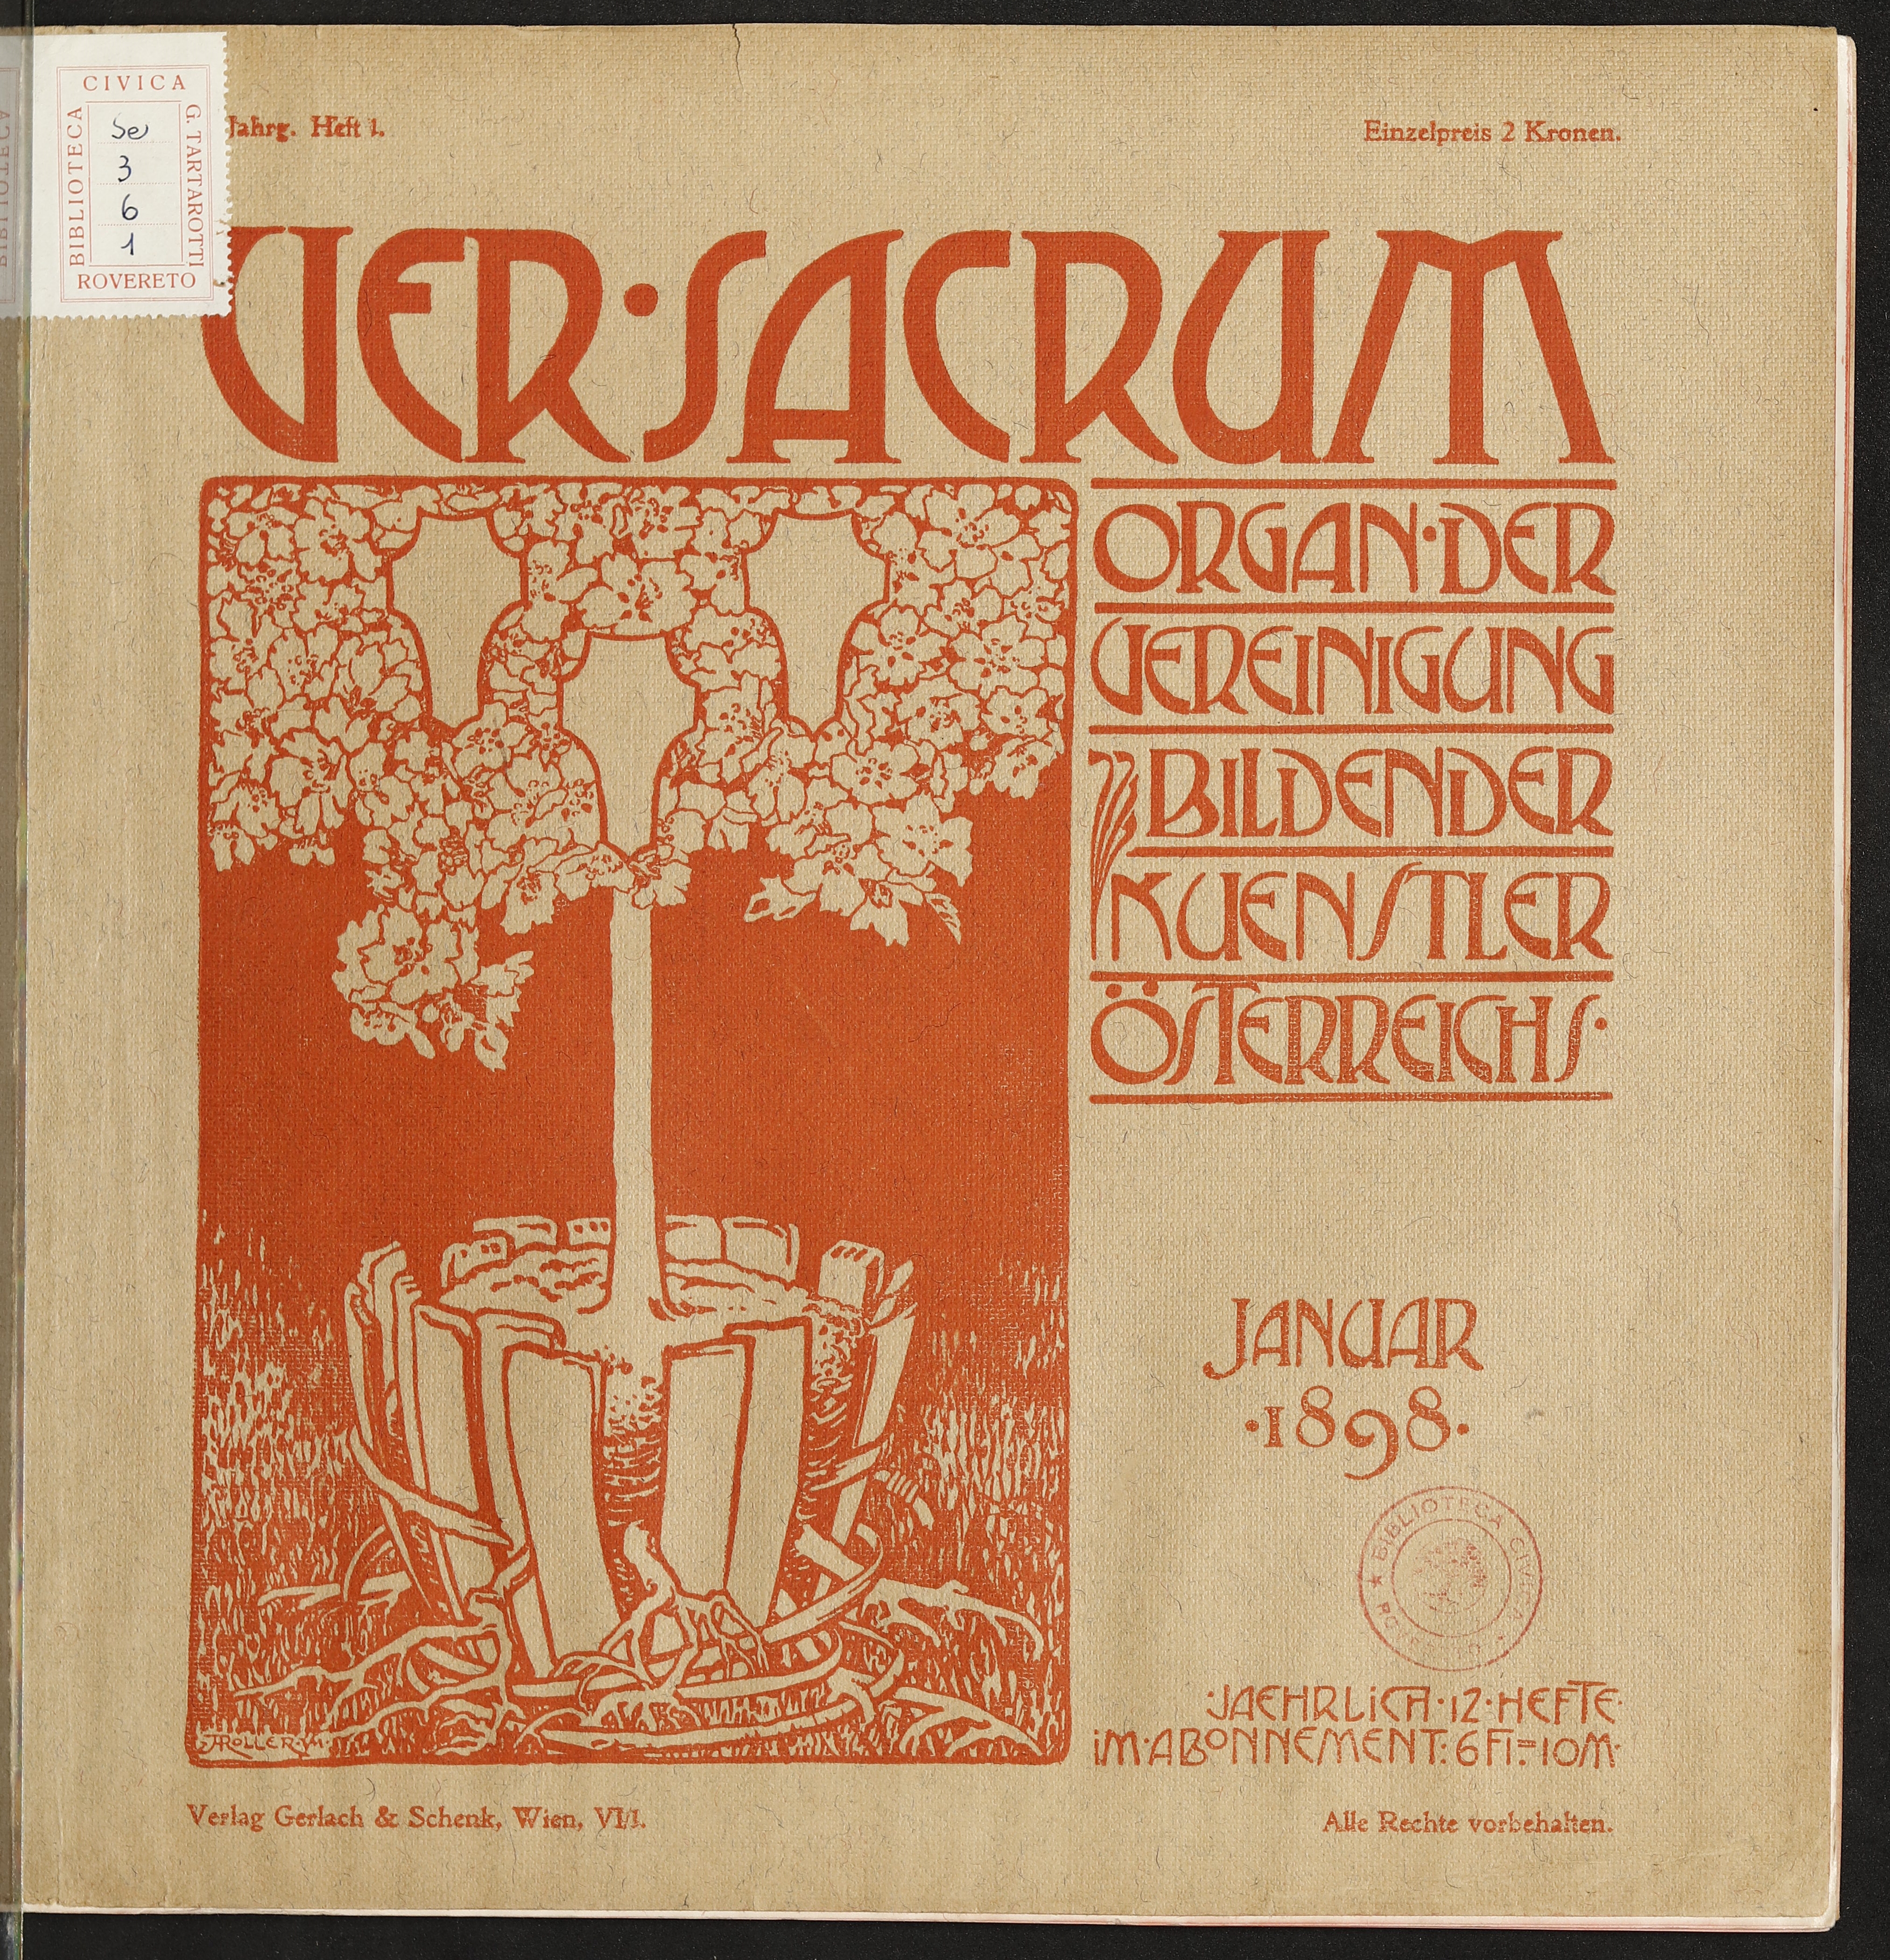 Ver Sacrum - gennaio 1898